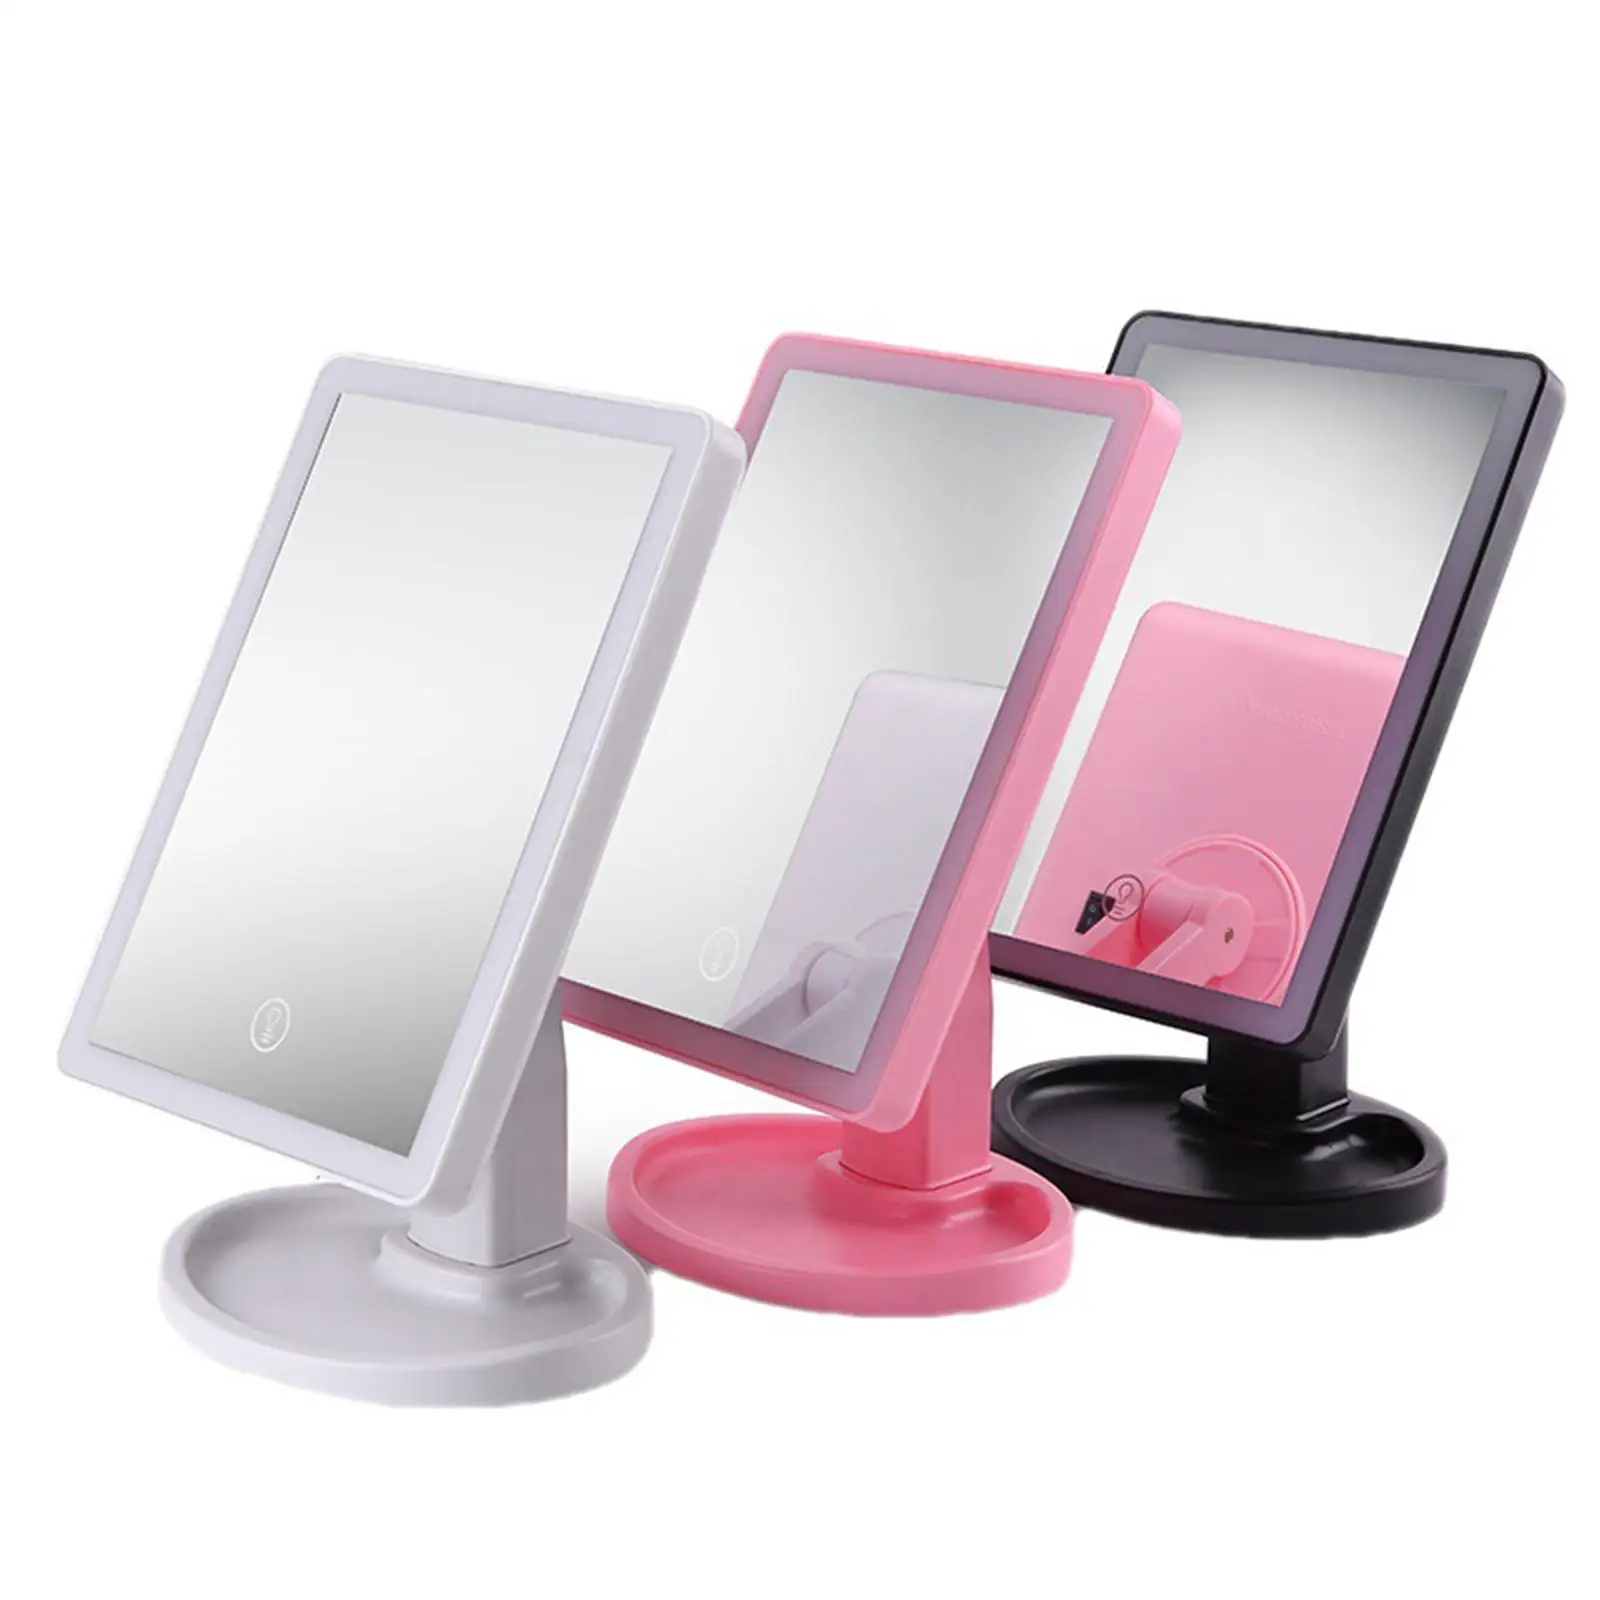 Makeup Mirror with Lights Desk Vanity Mirror Portable Illuminated Mirror for Make Up Bathroom Vanity Desk Dressing Table Girls